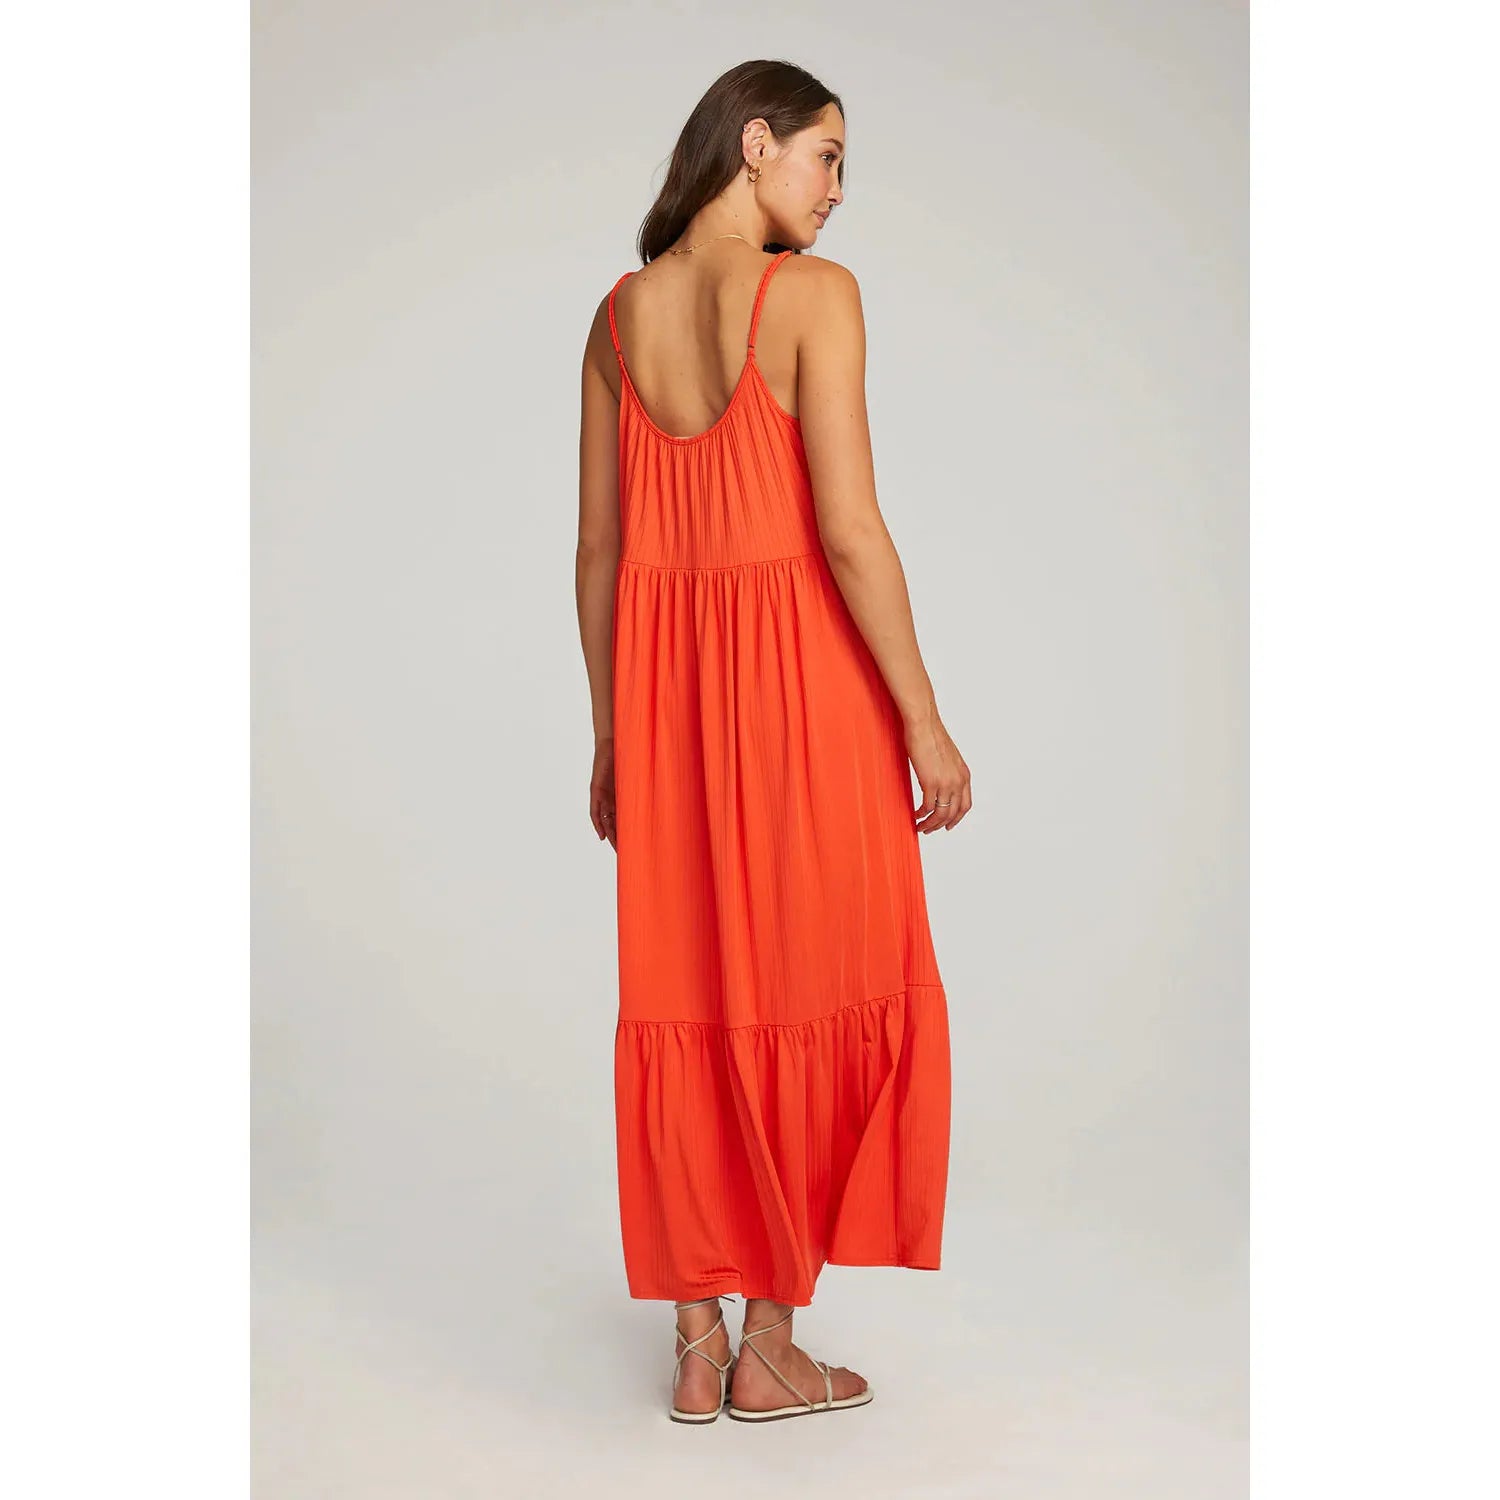 Saltwater Luxe - Tank Midi Dress in Hot Orange